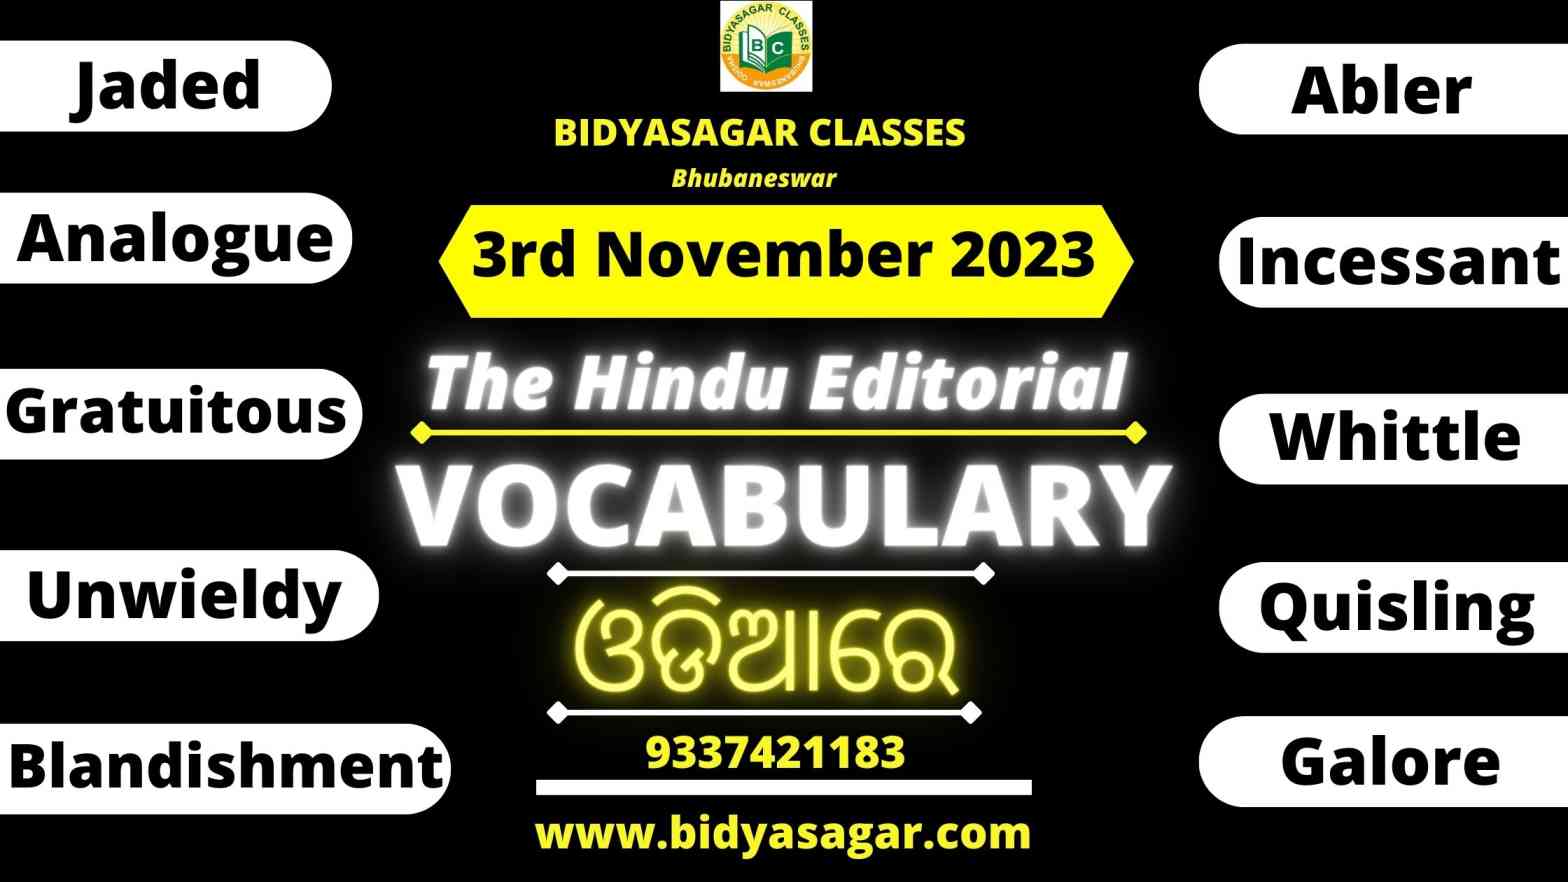 The Hindu Editorial Vocabulary of 3rd November 2023